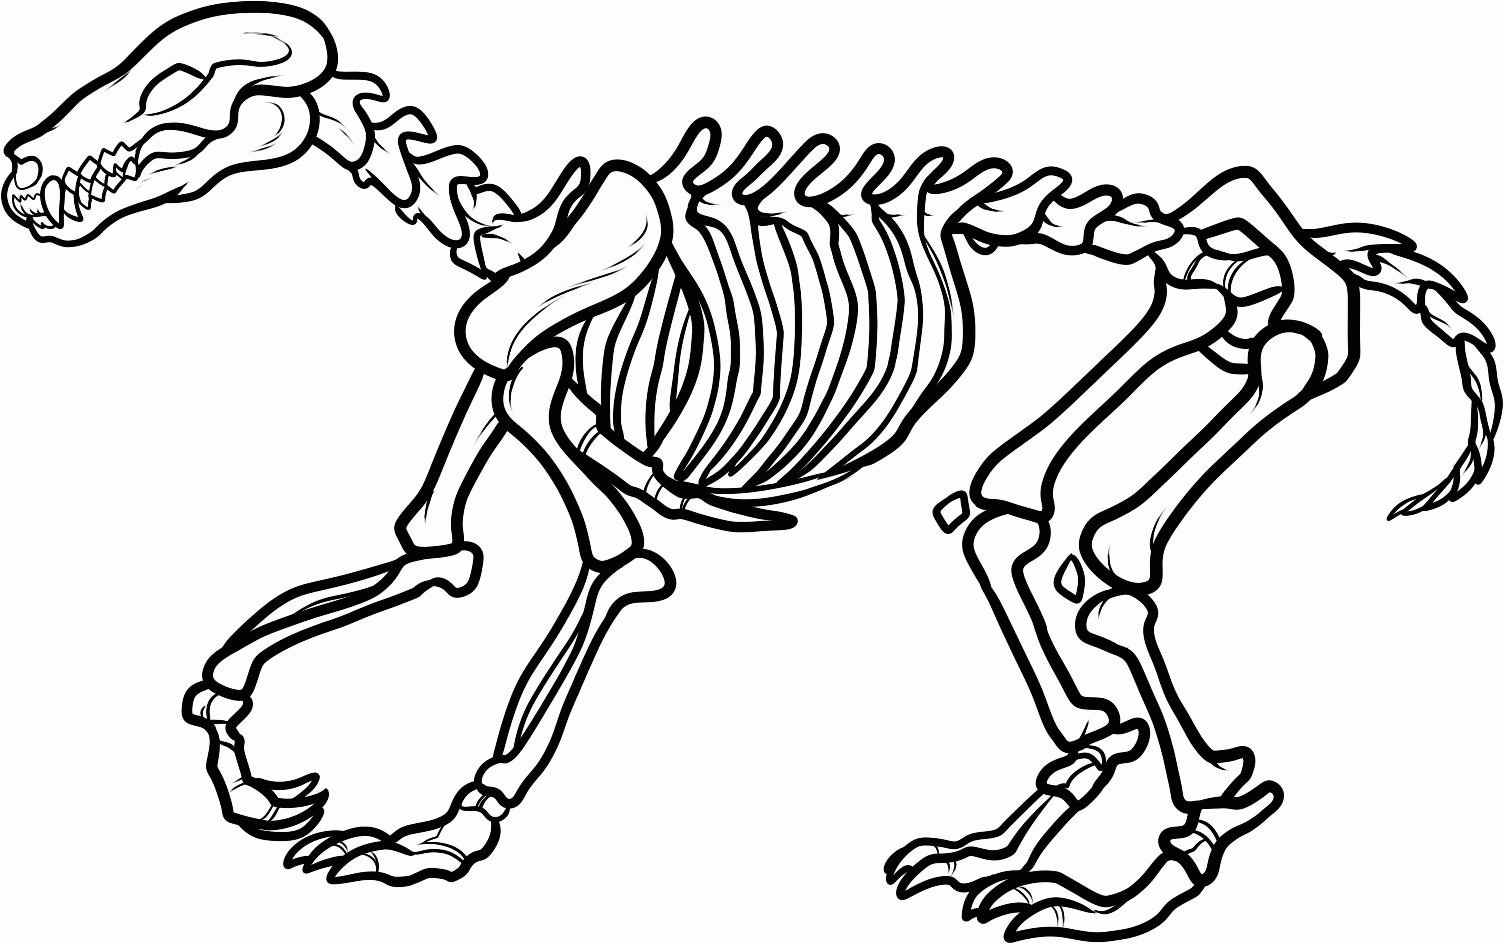 Dinosaur skeleton coloring page